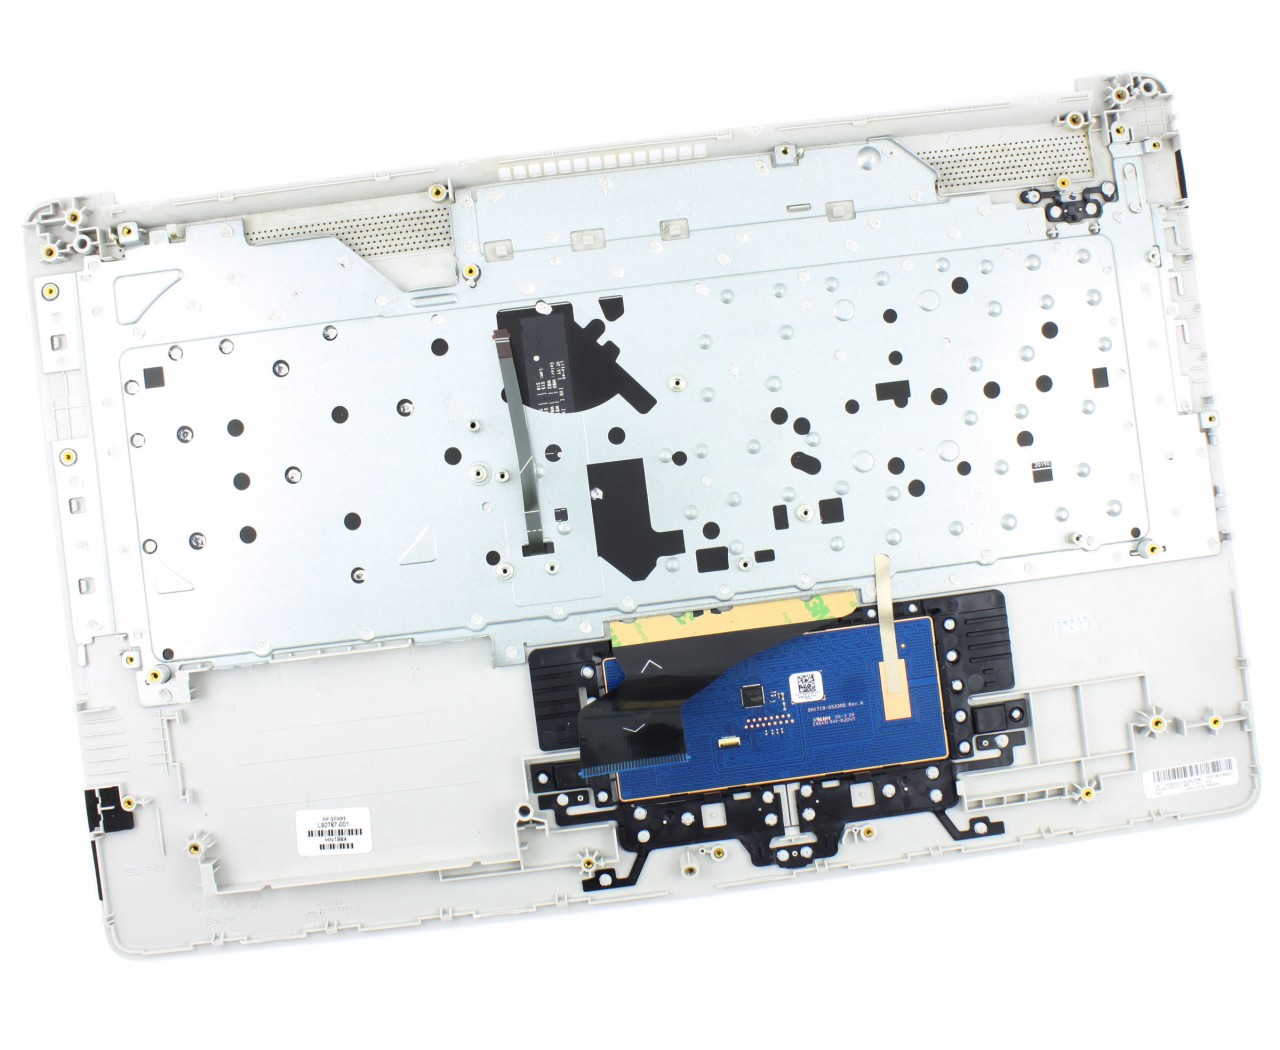 Tastatura HP L48409-001 Argintie cu Palmrest Argintiu si TouchPad iluminata backlit argintie